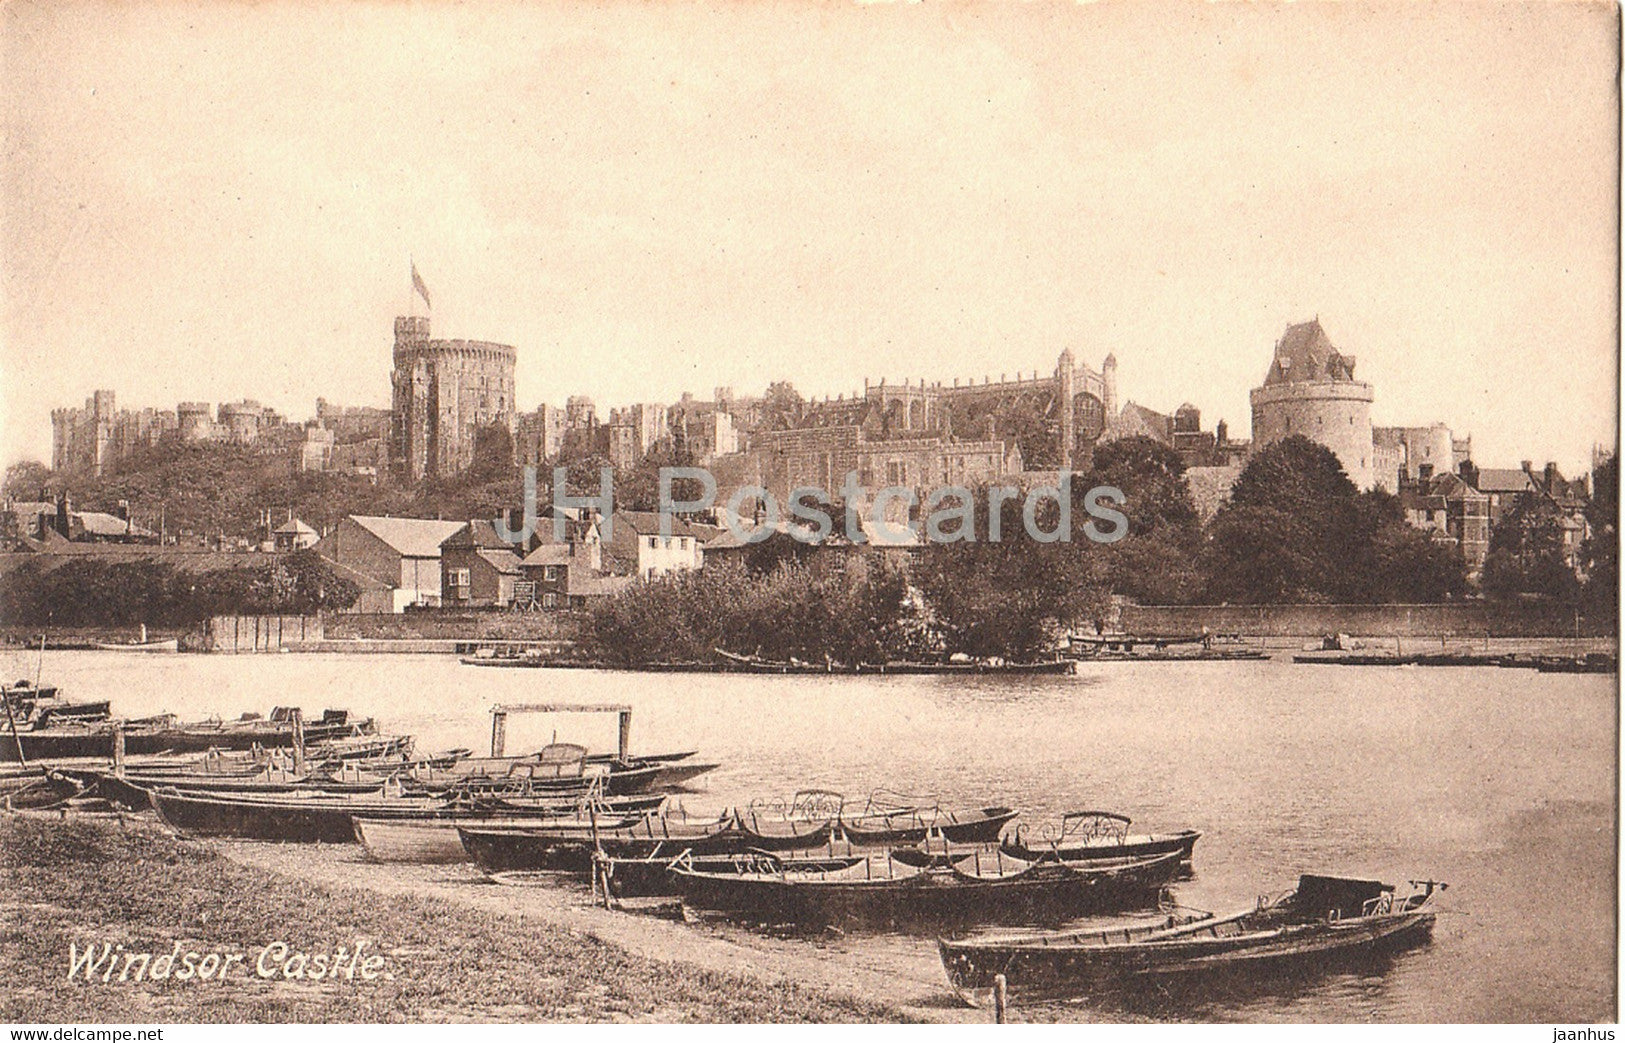 Windsor Castle - boat - 35367 - old postcard - England - United Kingdom - unused - JH Postcards